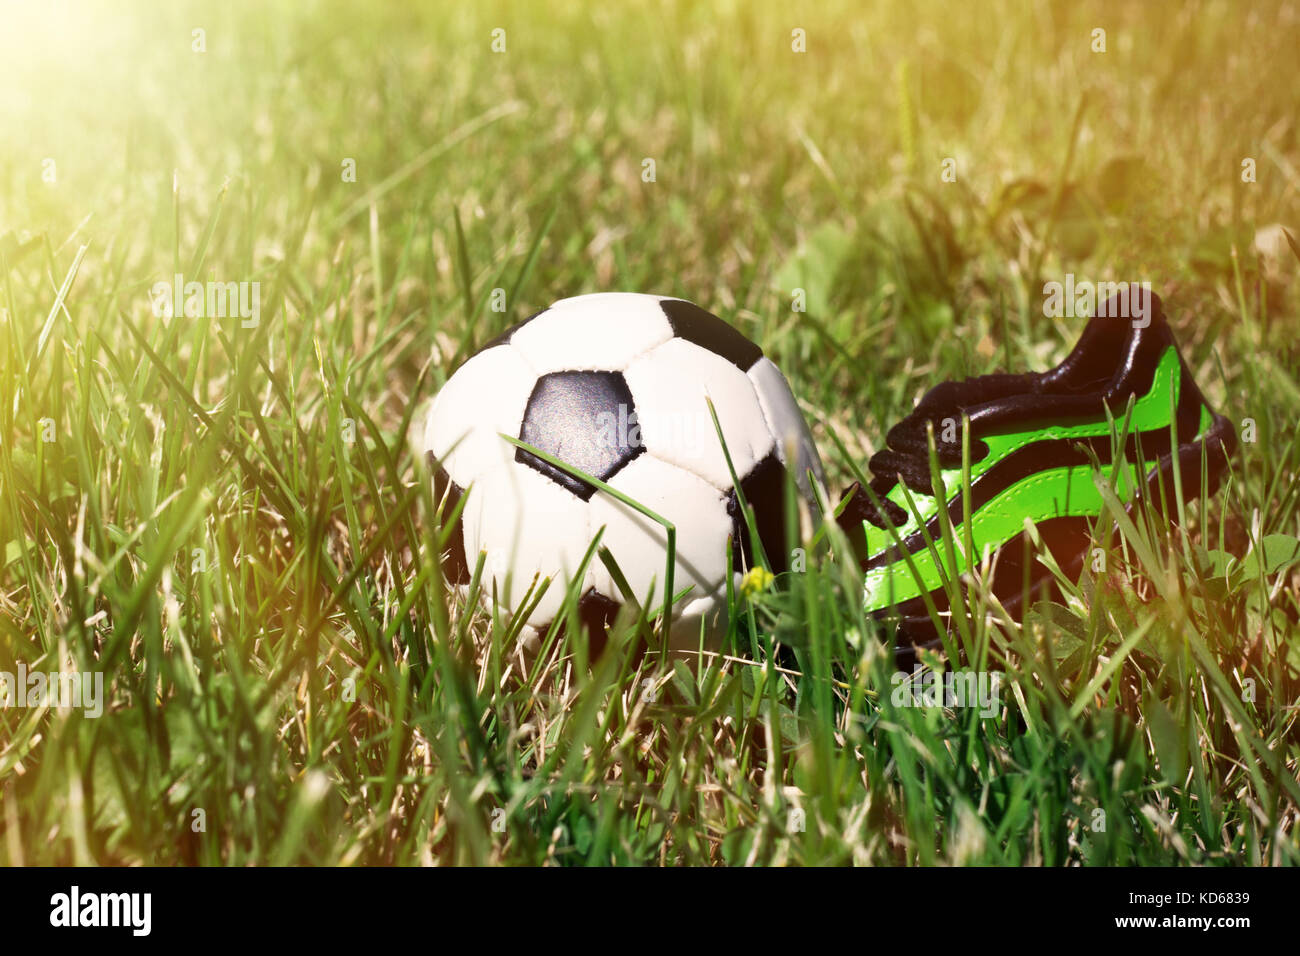 Soccer ball on grass in the sunlight Stock Photo